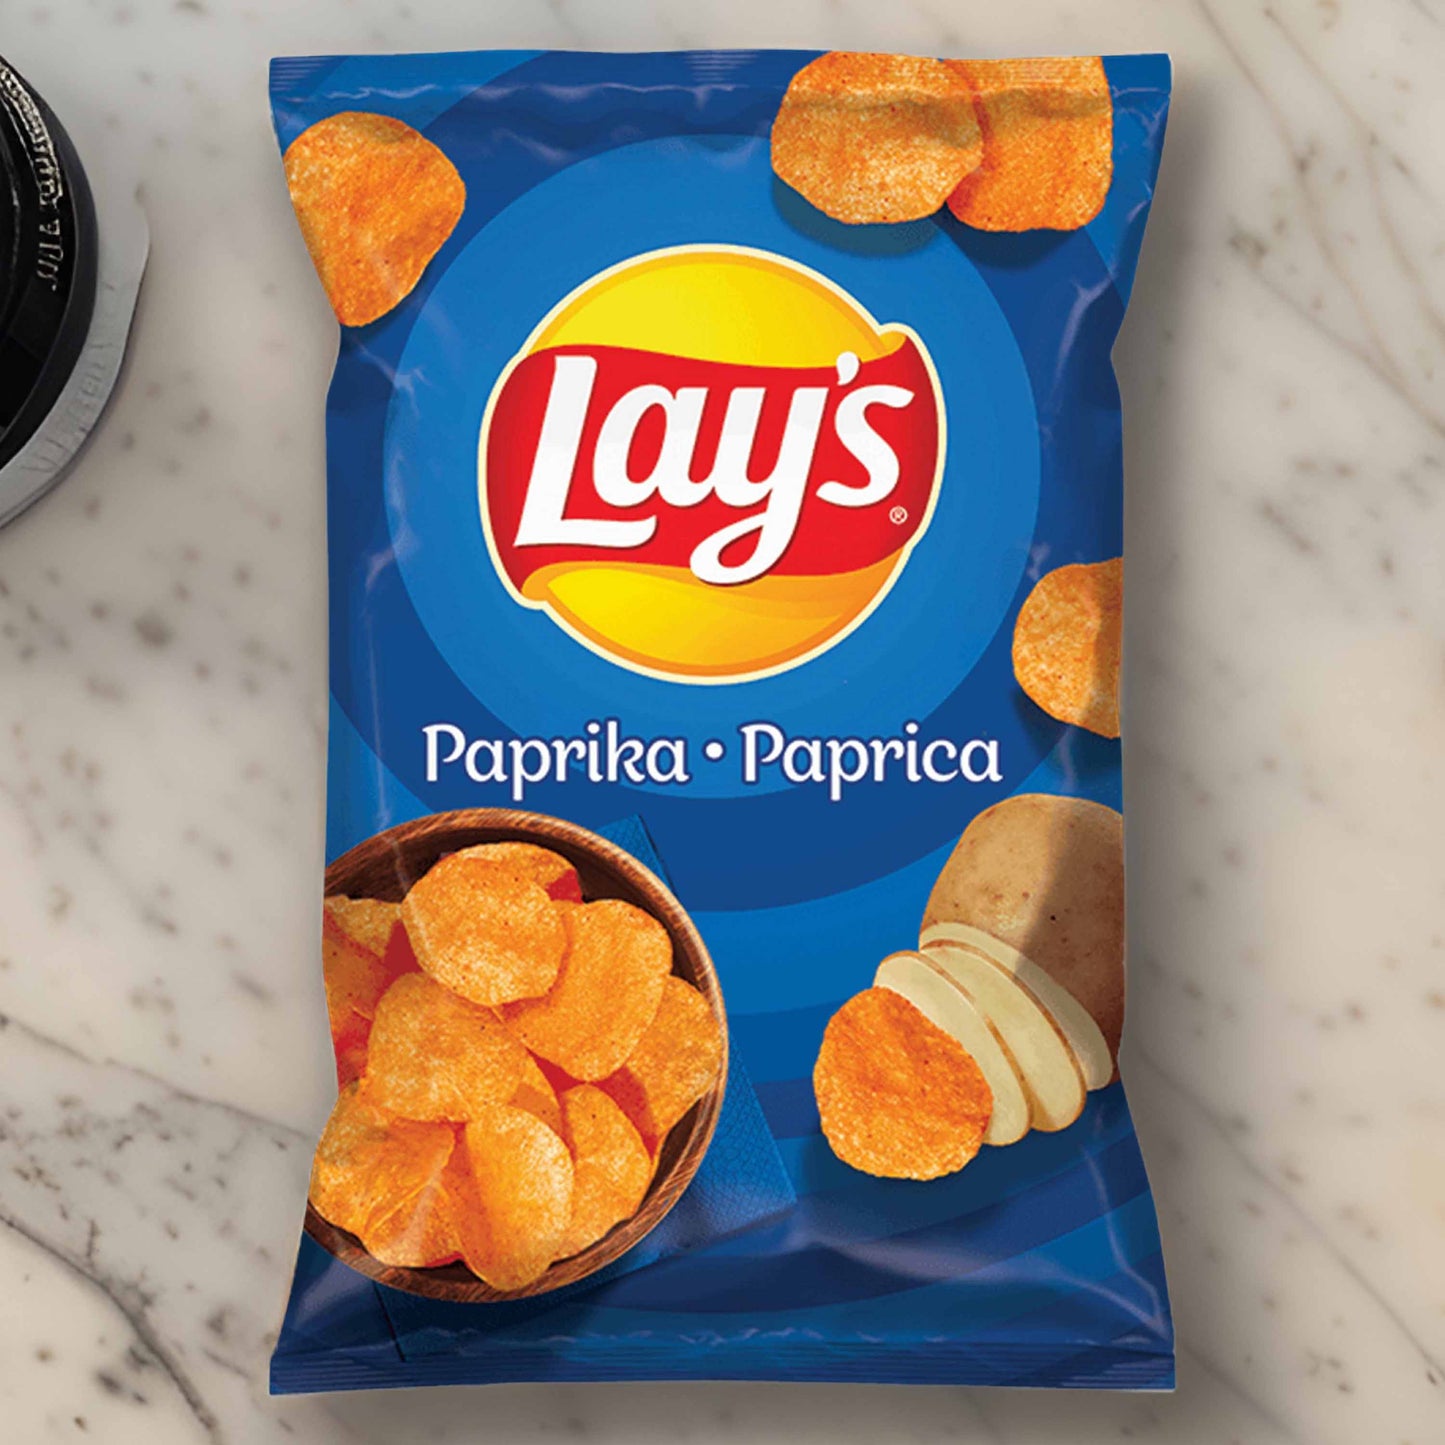 Lay's Paprika Crisps - 140g - International Snacks